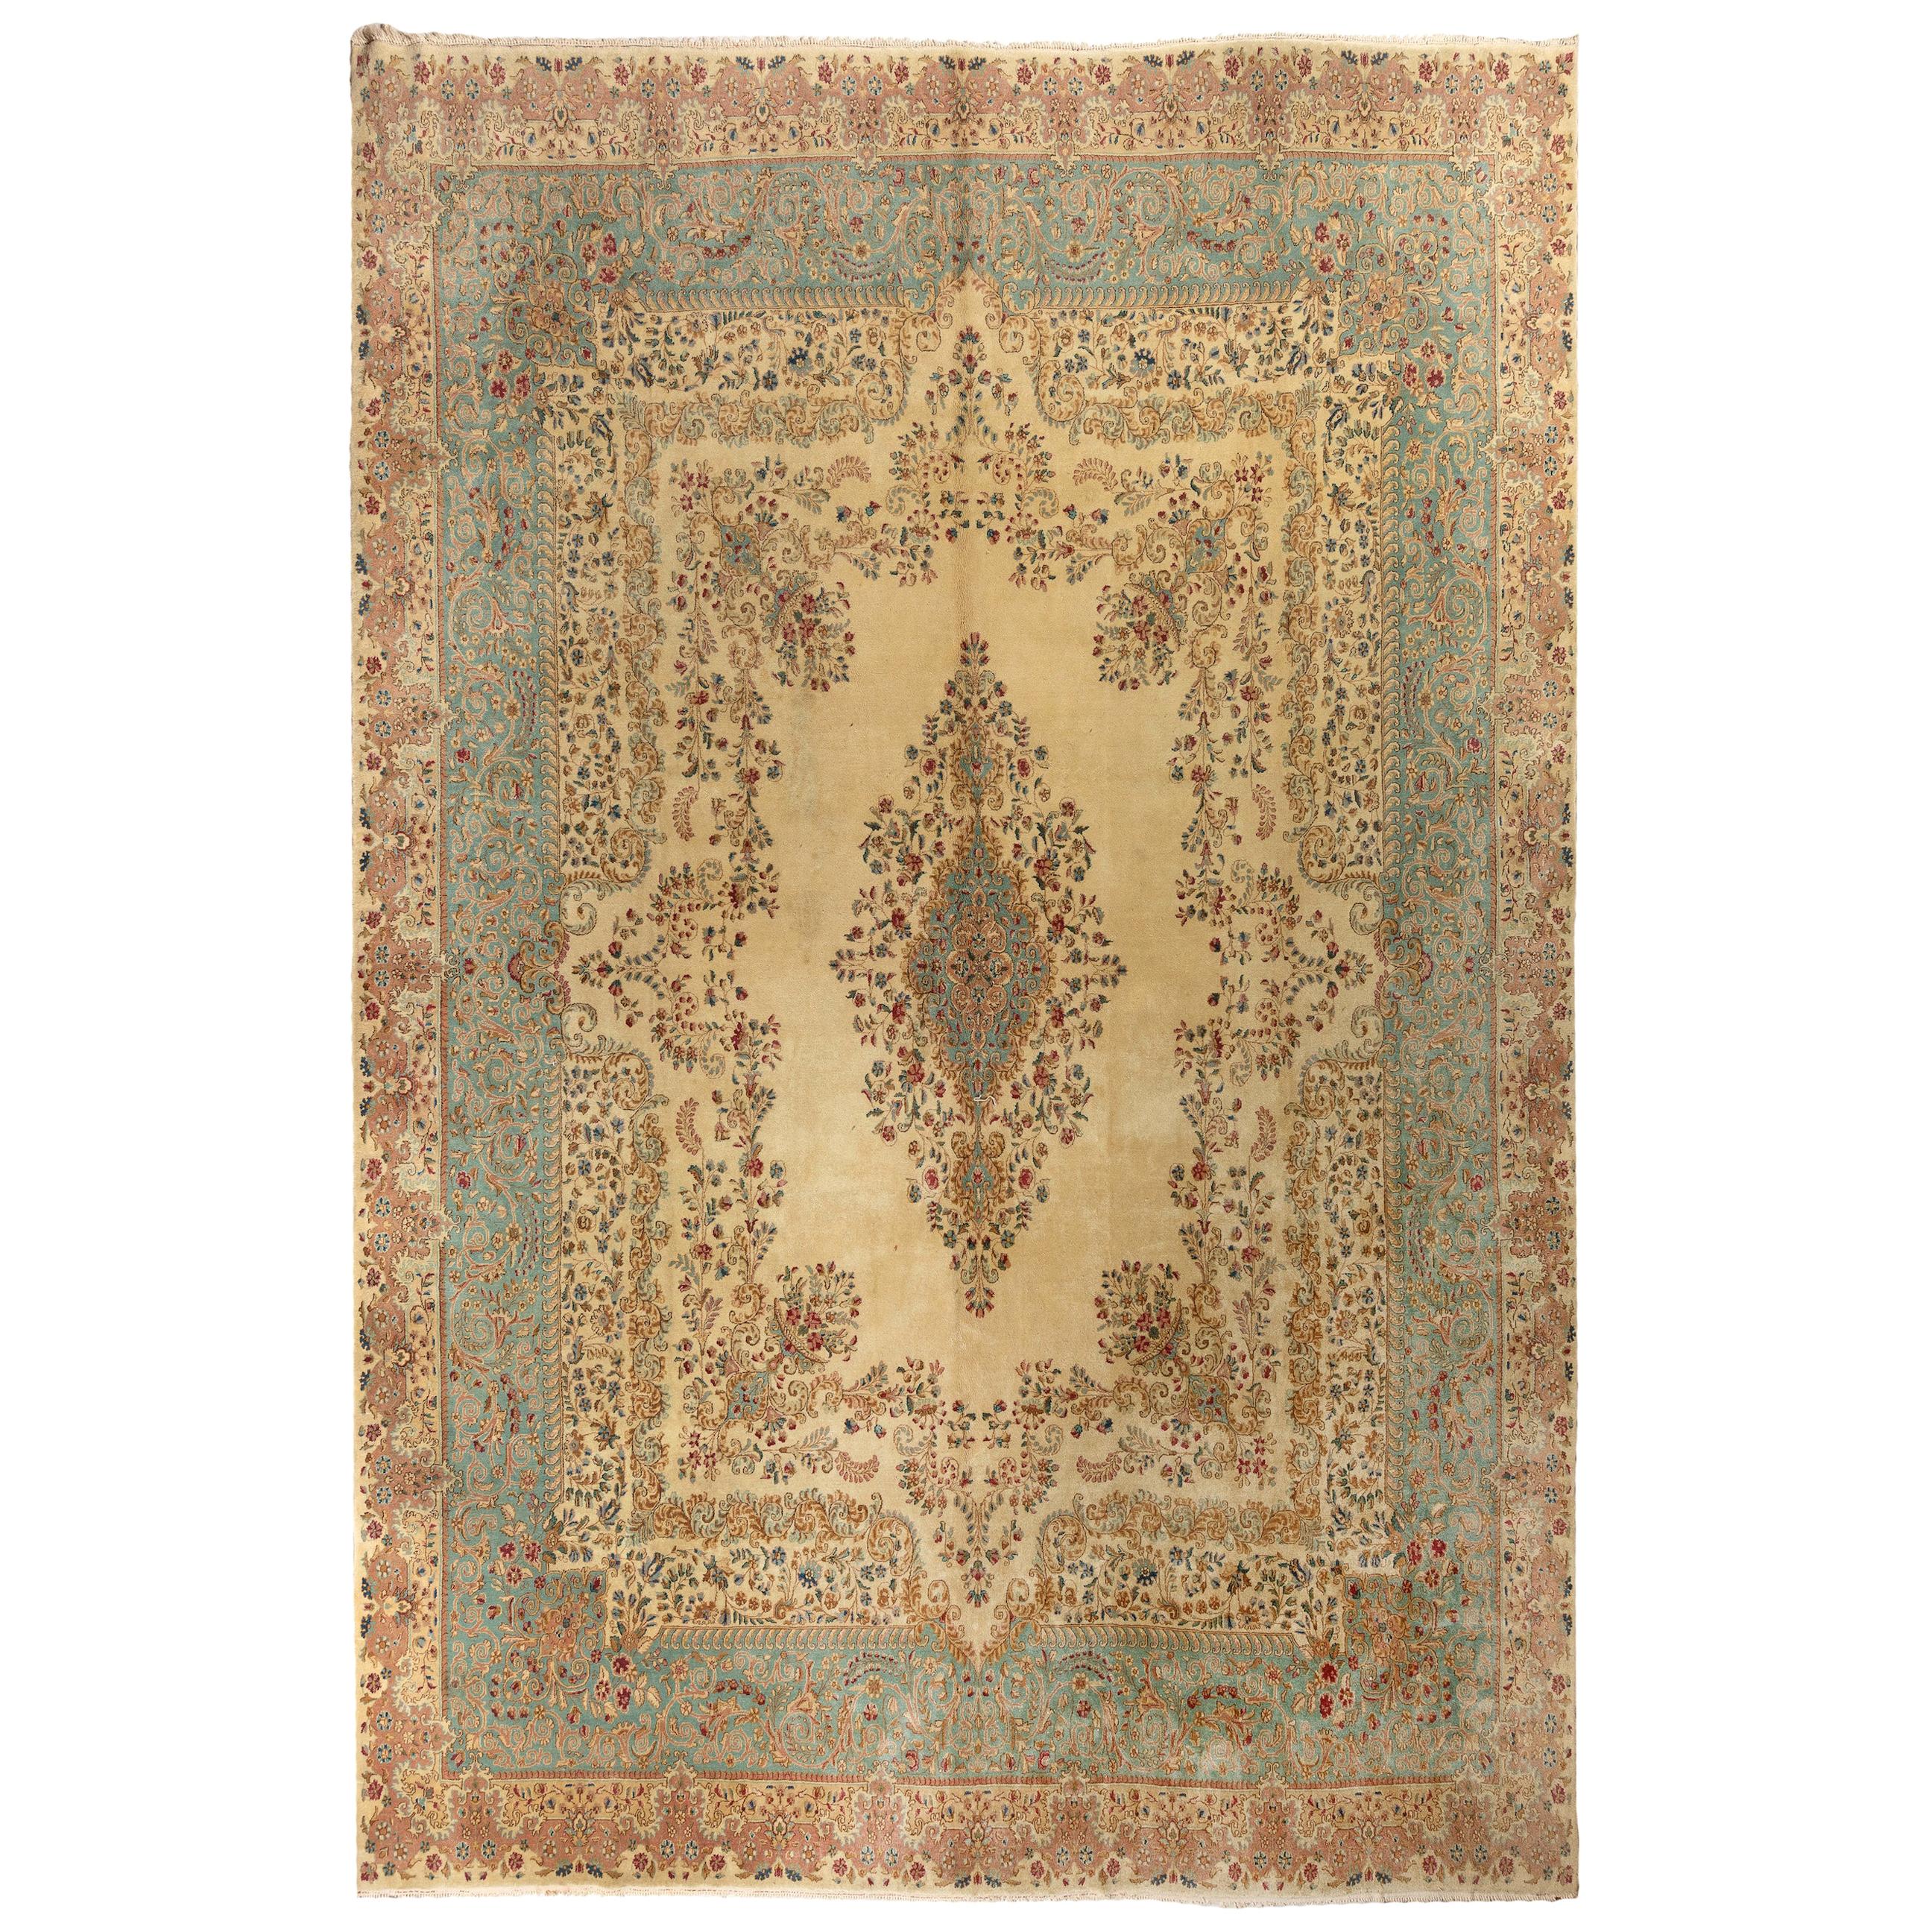 Vintage Persian Kerman Rug, Soft Merino Wool, Beautiful Colors, 11.2 x 13.6 Ft 